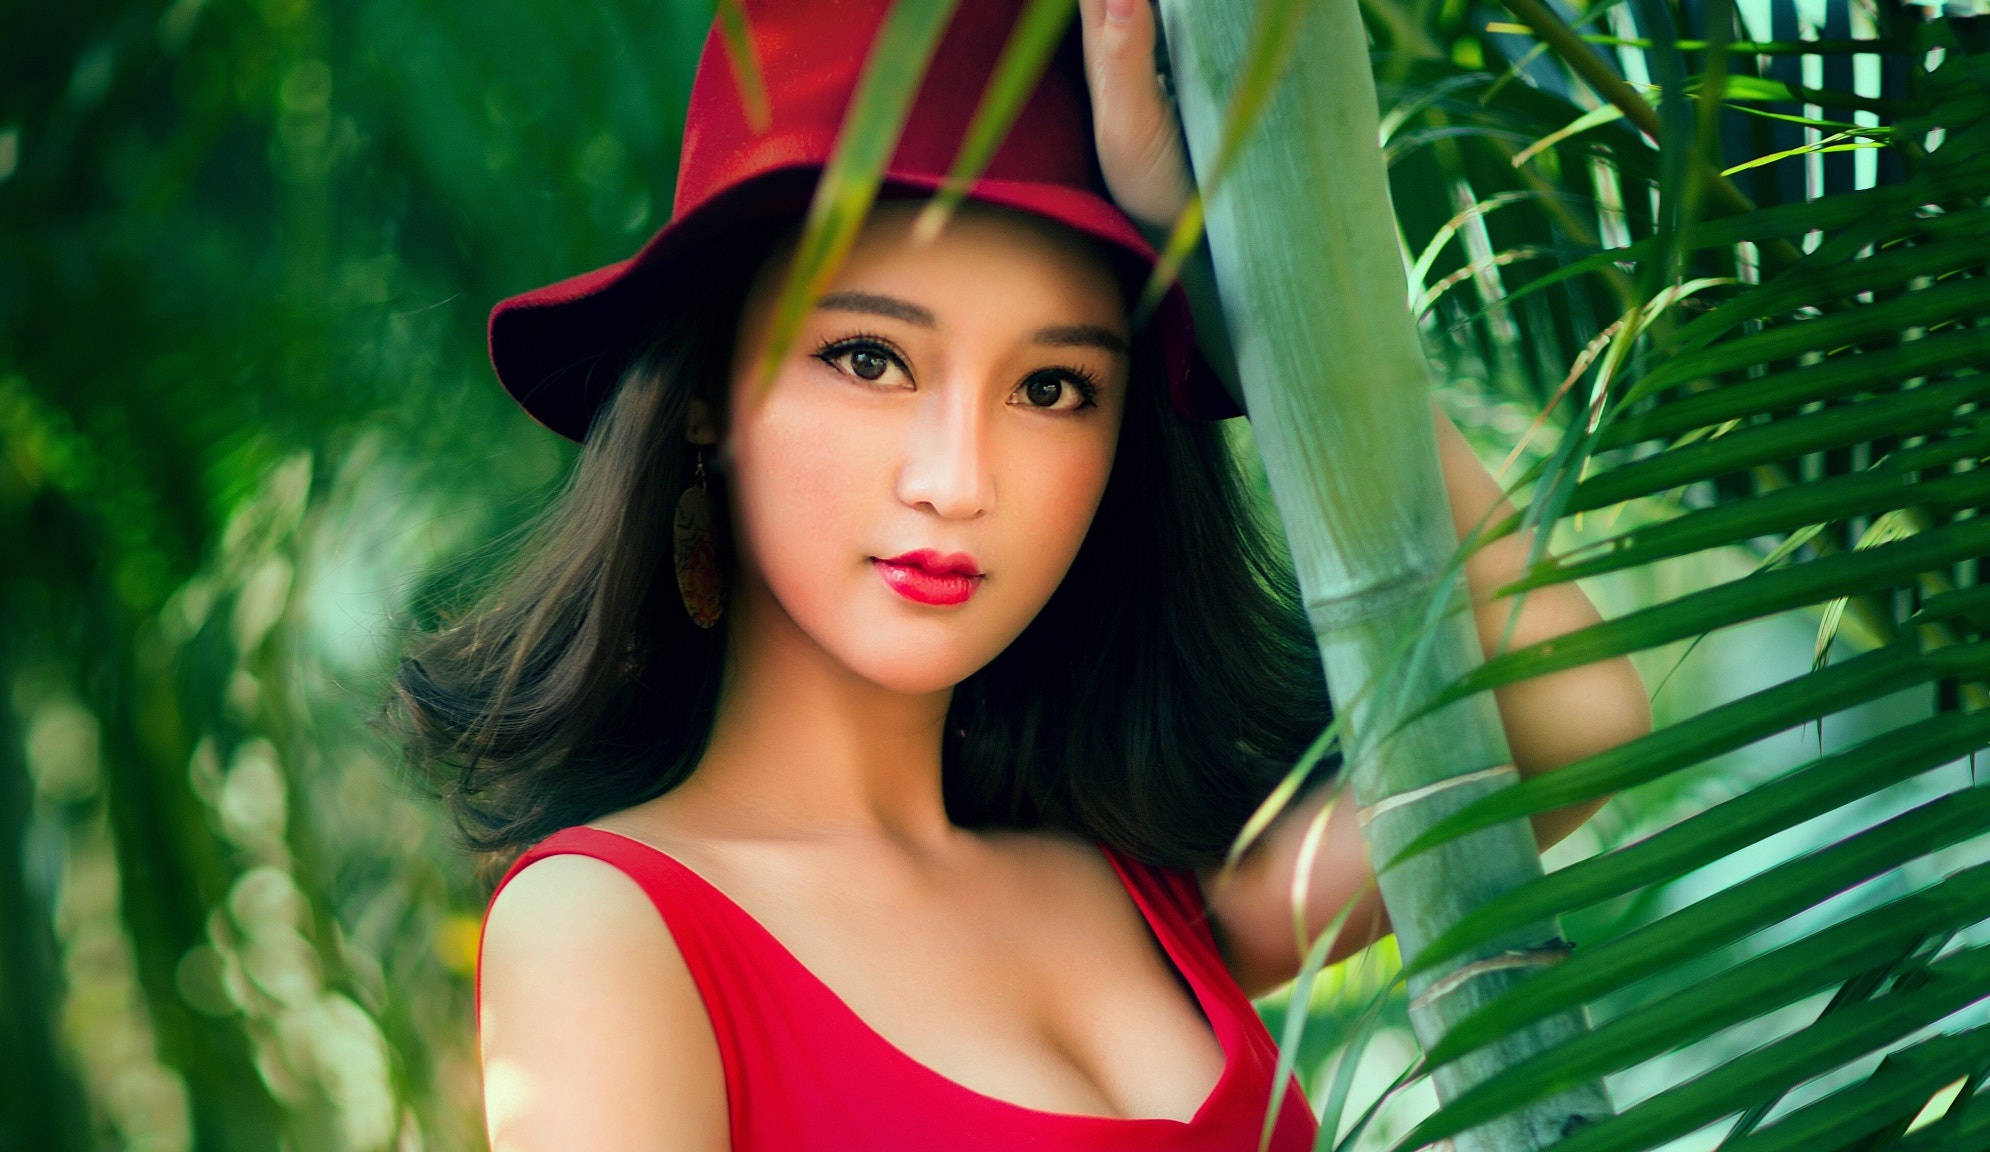 Vietnamese girl. Азиатские девушки. Вьетнамки девушки. Вьетнамские красавицы. Красивые азиатки.